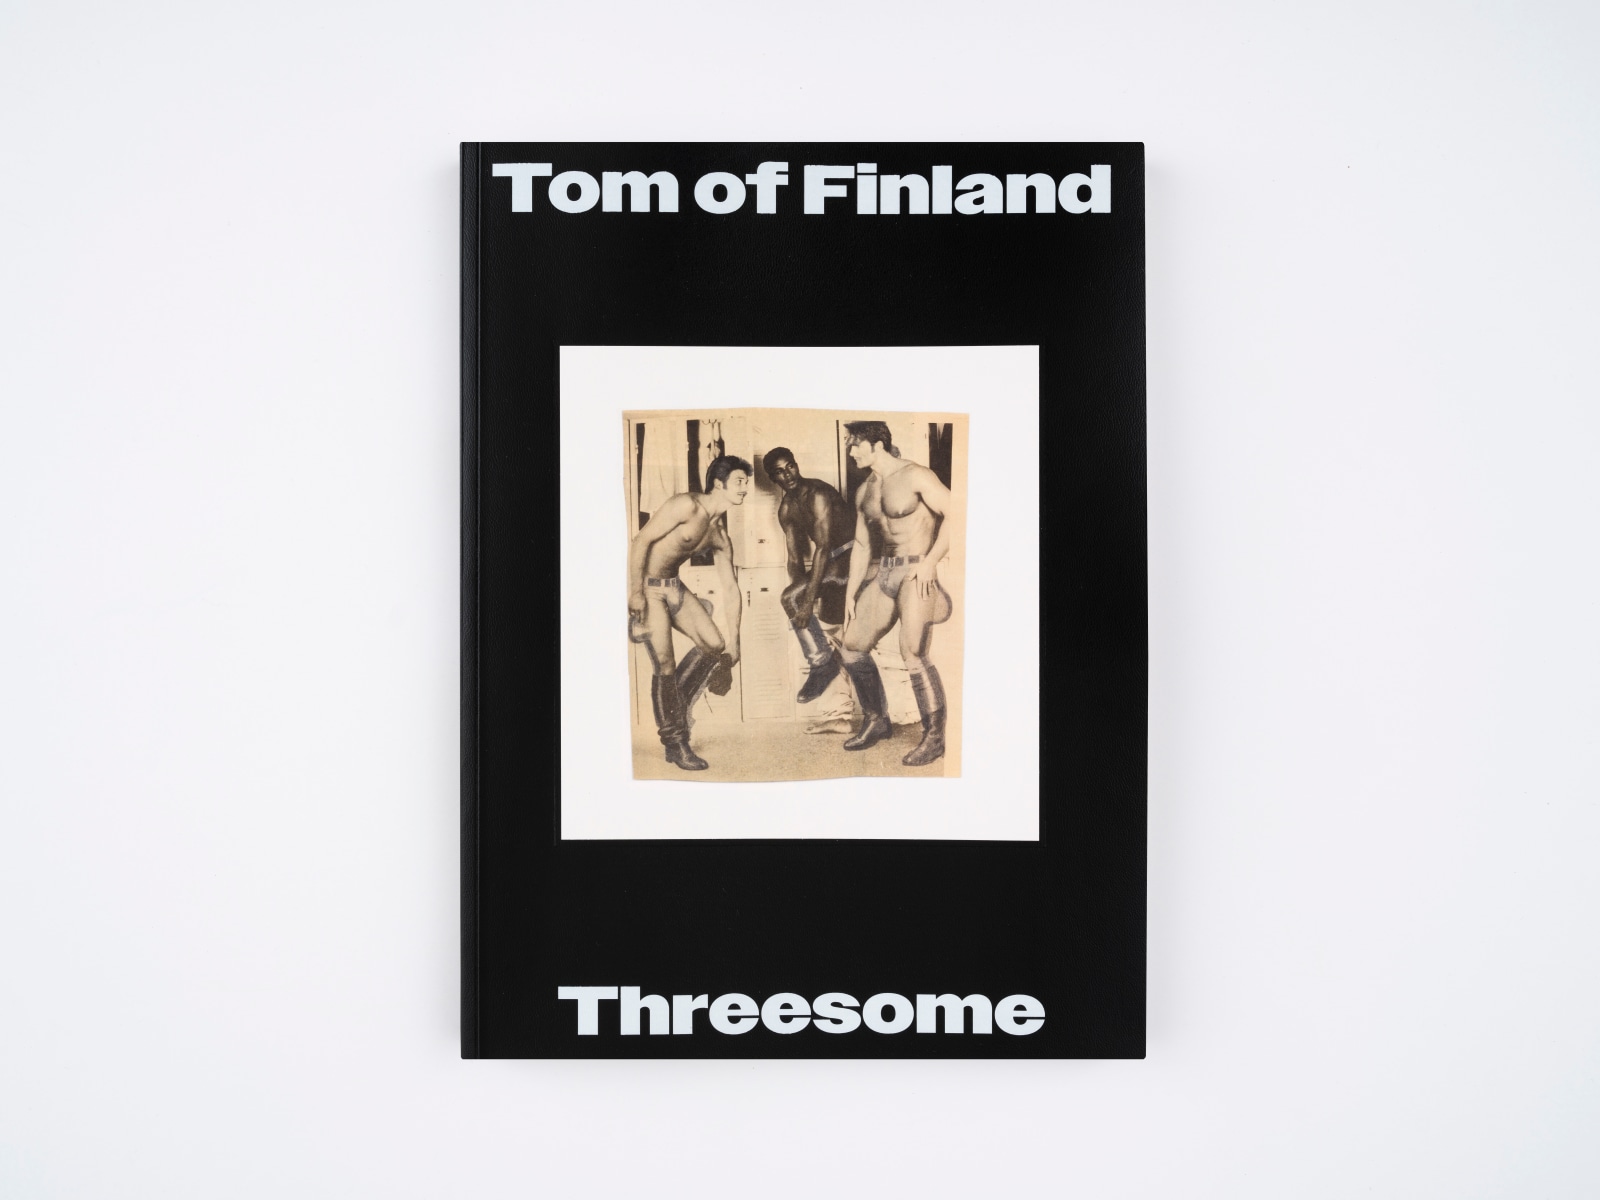 TOM OF FINLAND: THREESOME